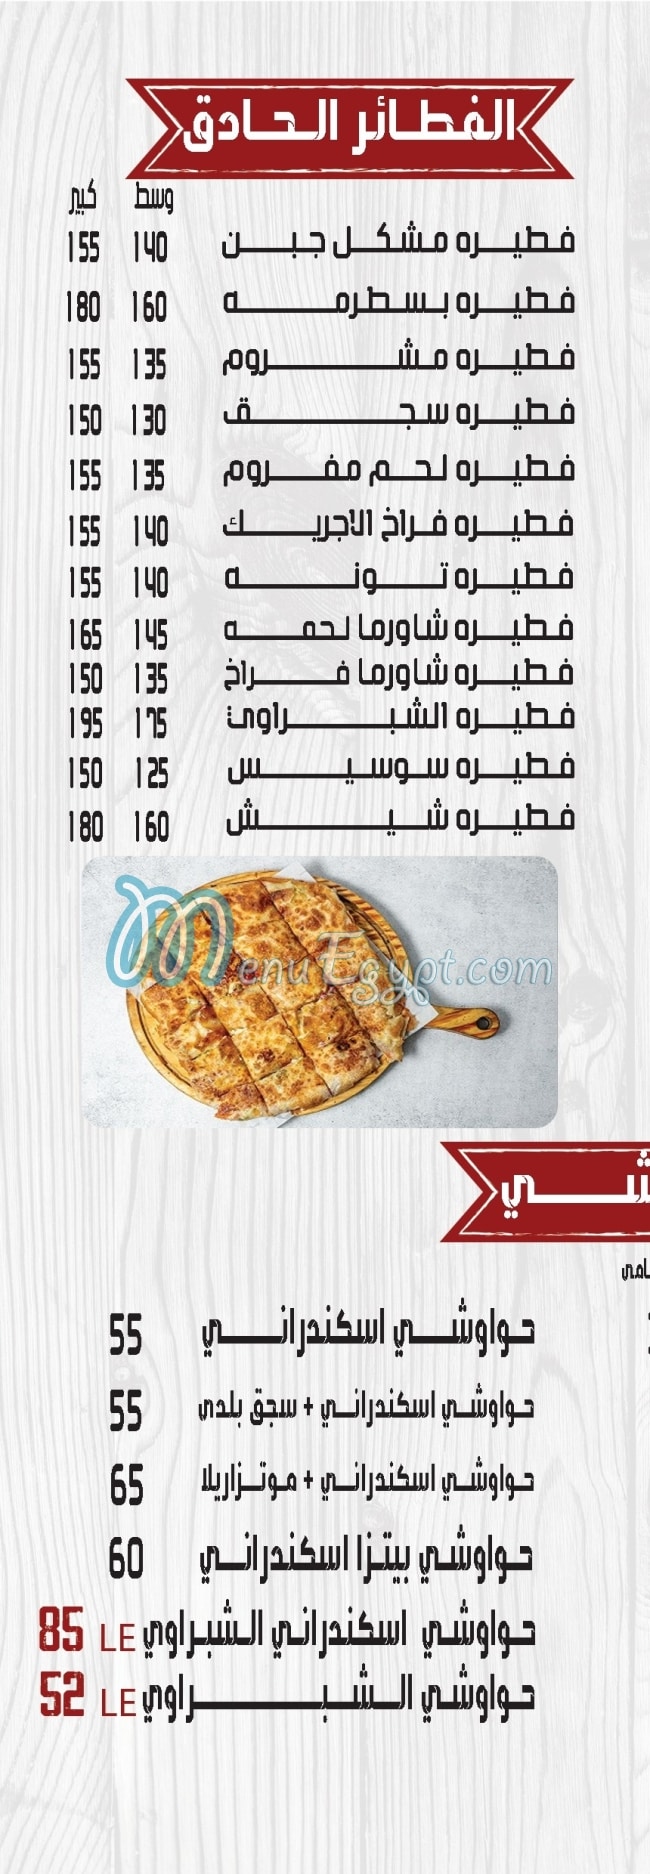 Elshabrawy Maadi menu Egypt 3